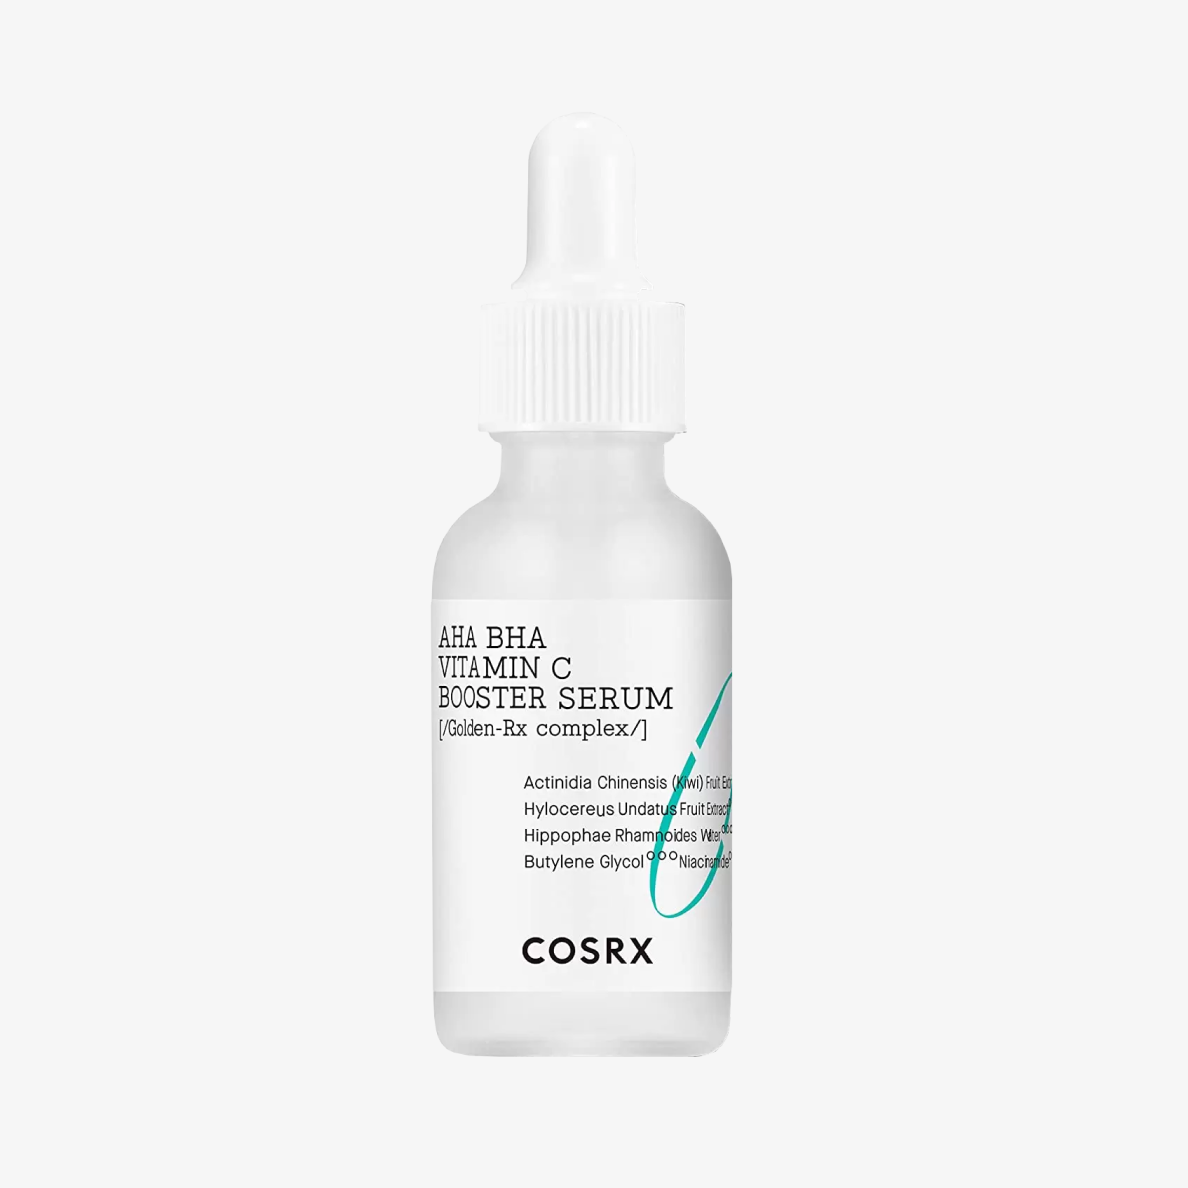 Cosrx Refresh AHA BHA Vitamin C Booster Serum